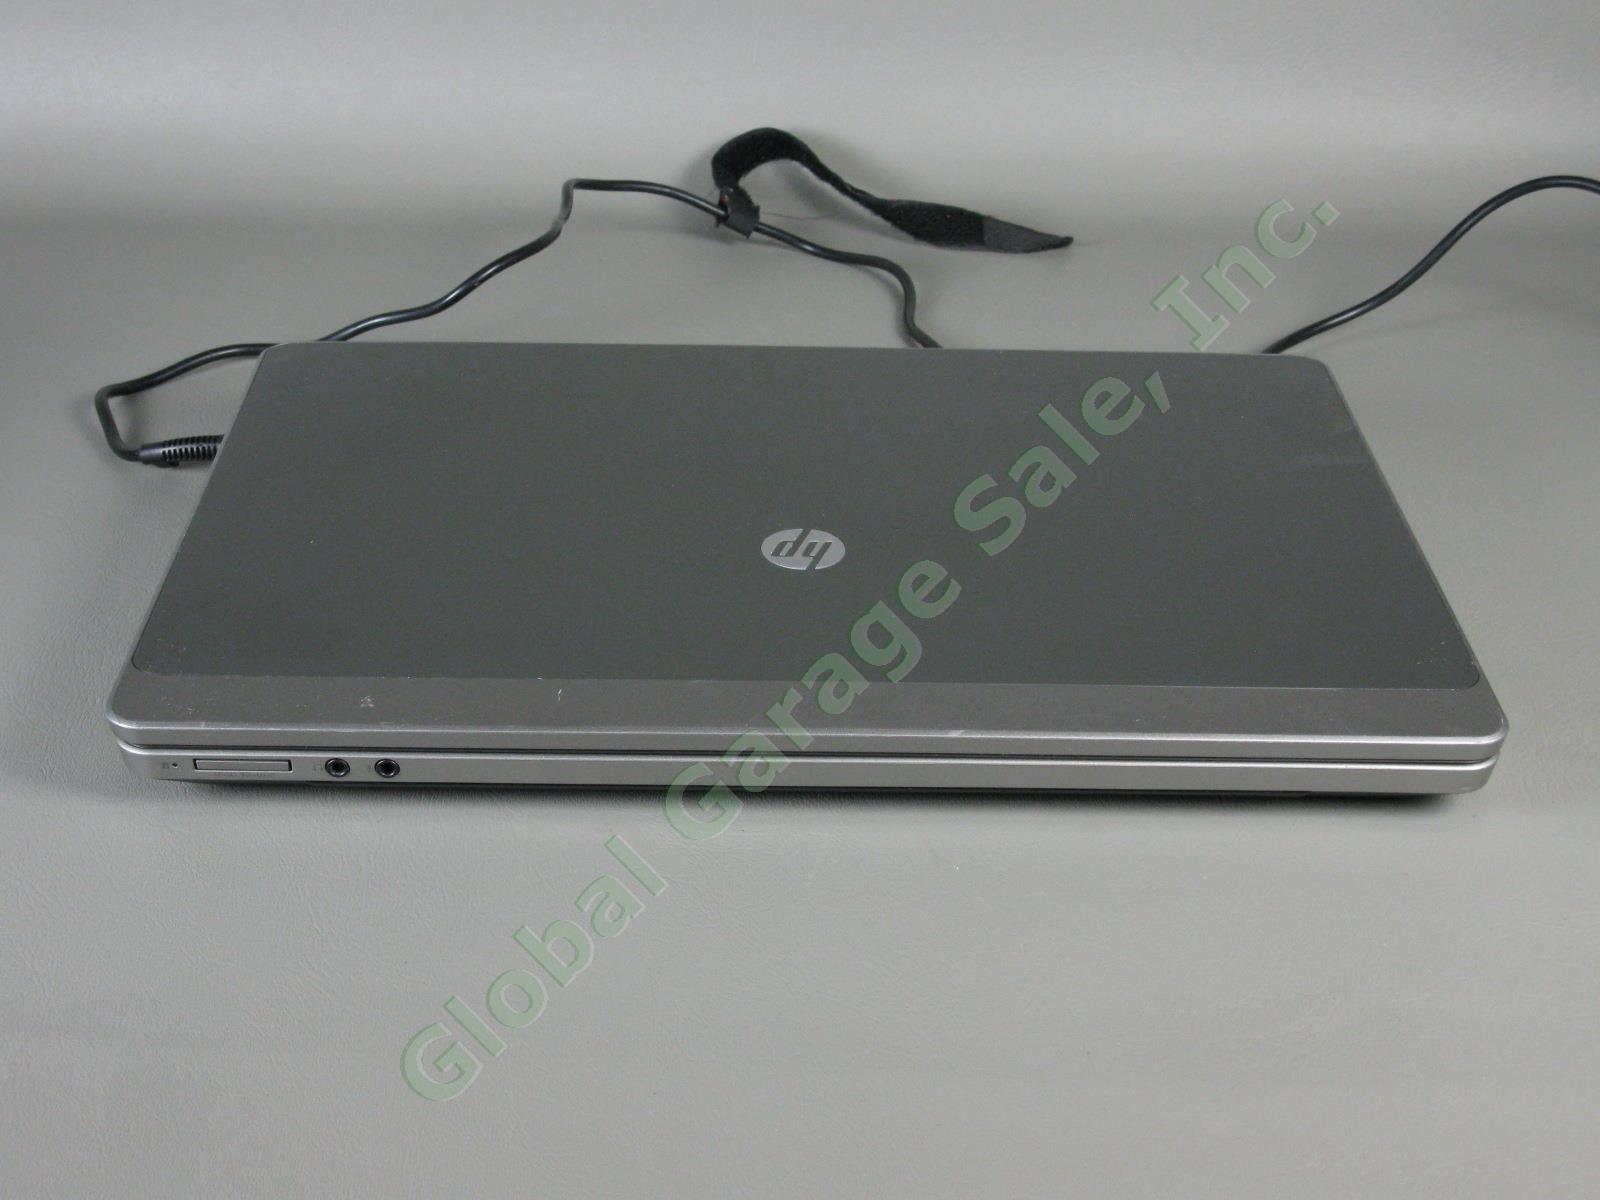 HP ProBook 4530s Laptop Computer Intel i5 2.30GHz 300GB HDD 2GB RAM Win 10 Pro 2